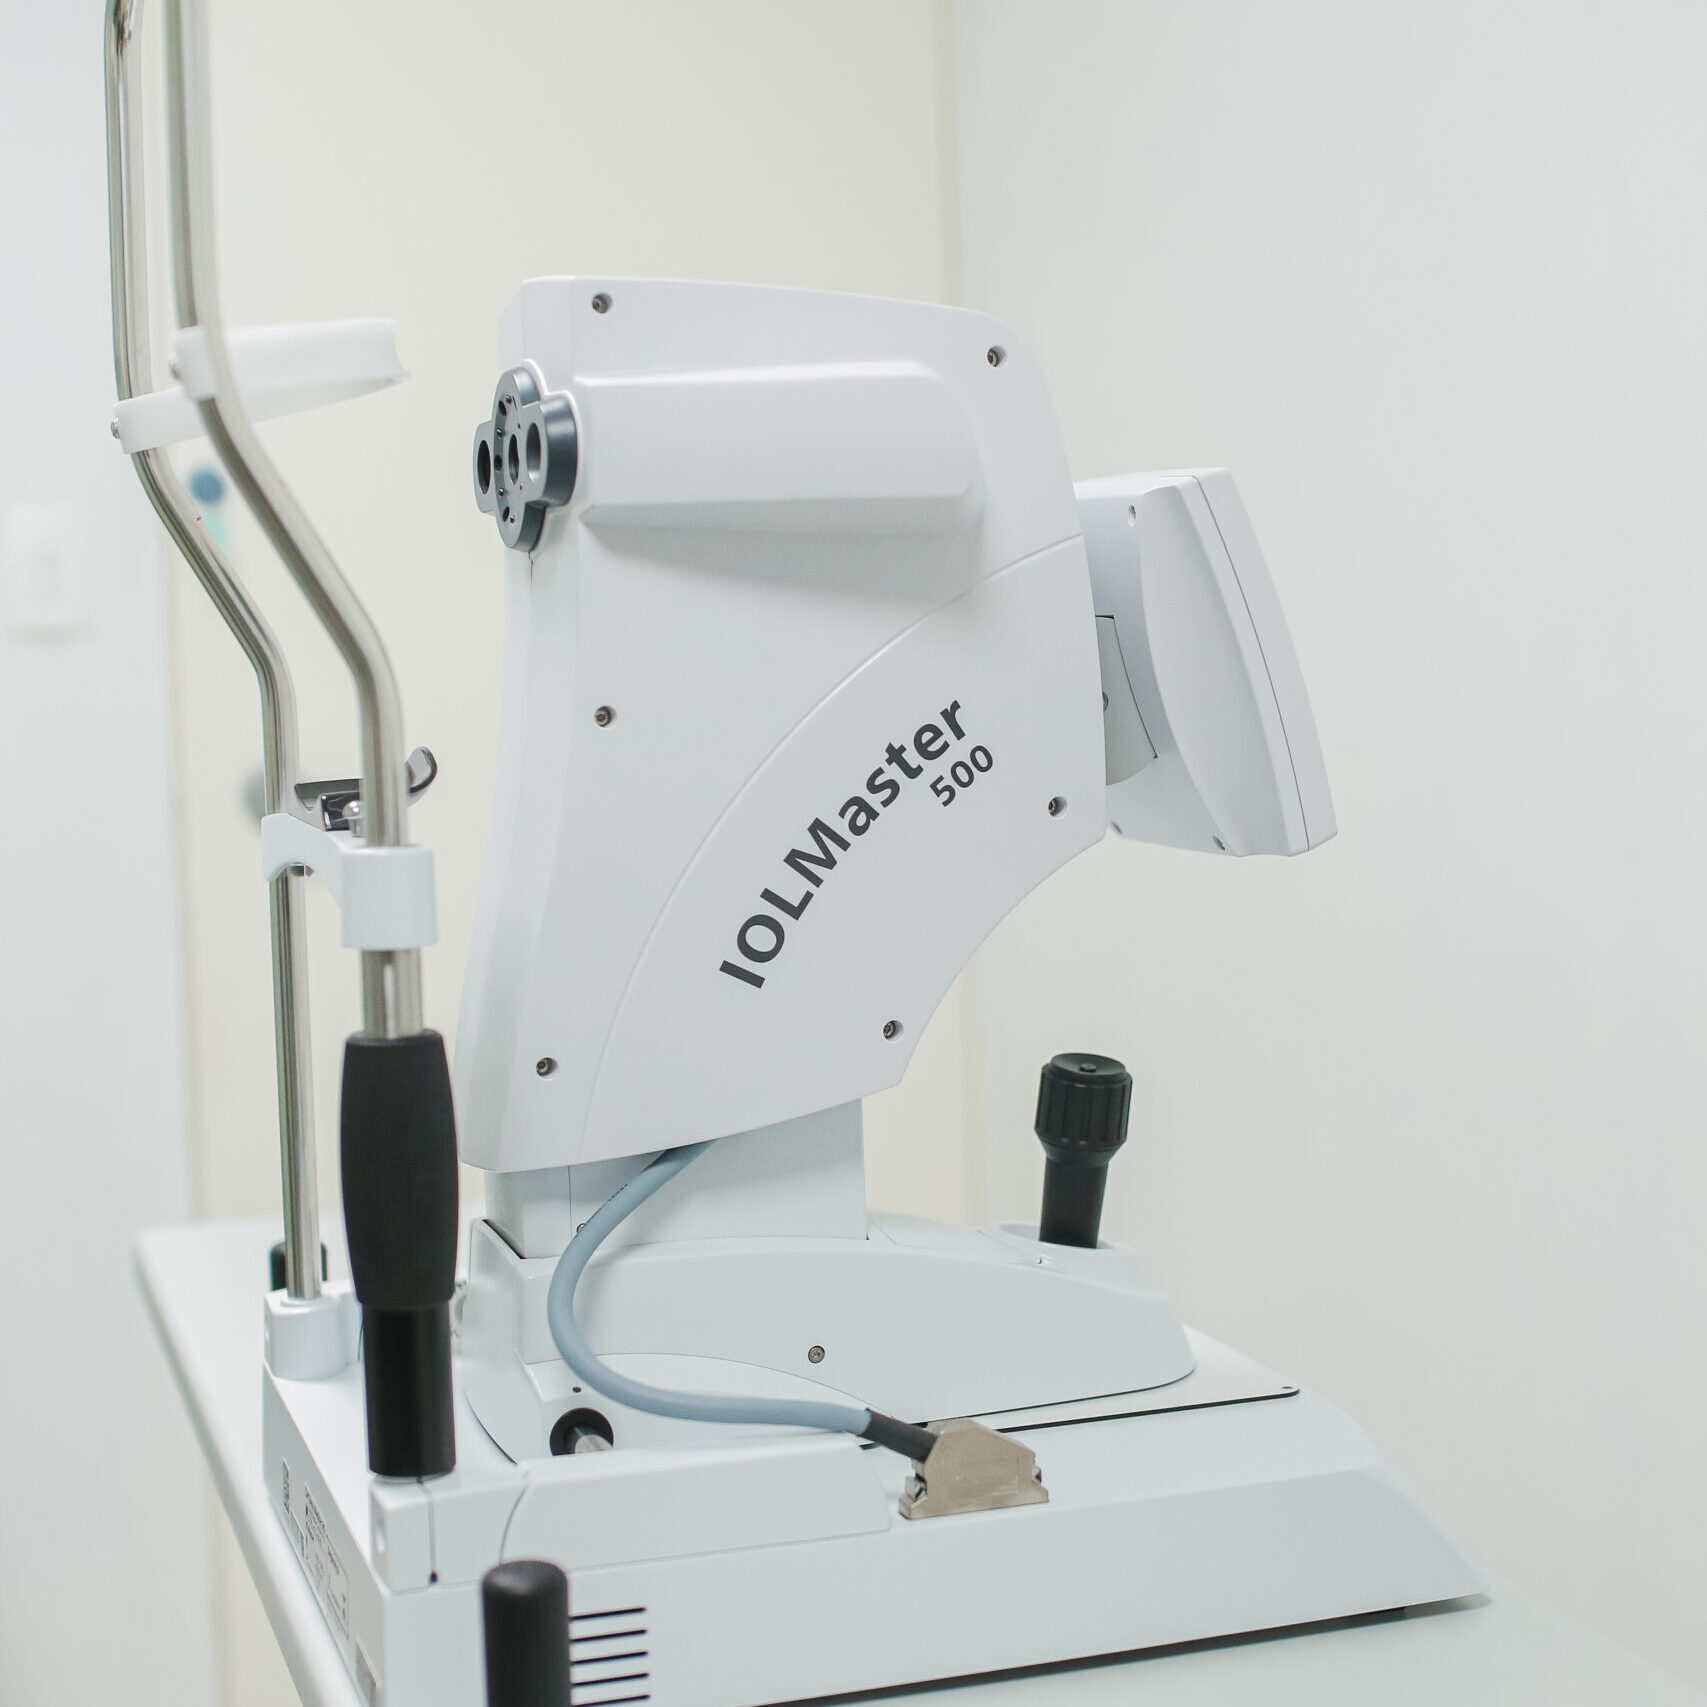 IOL-Master-biometro-otico-oftalmologia-drsuel